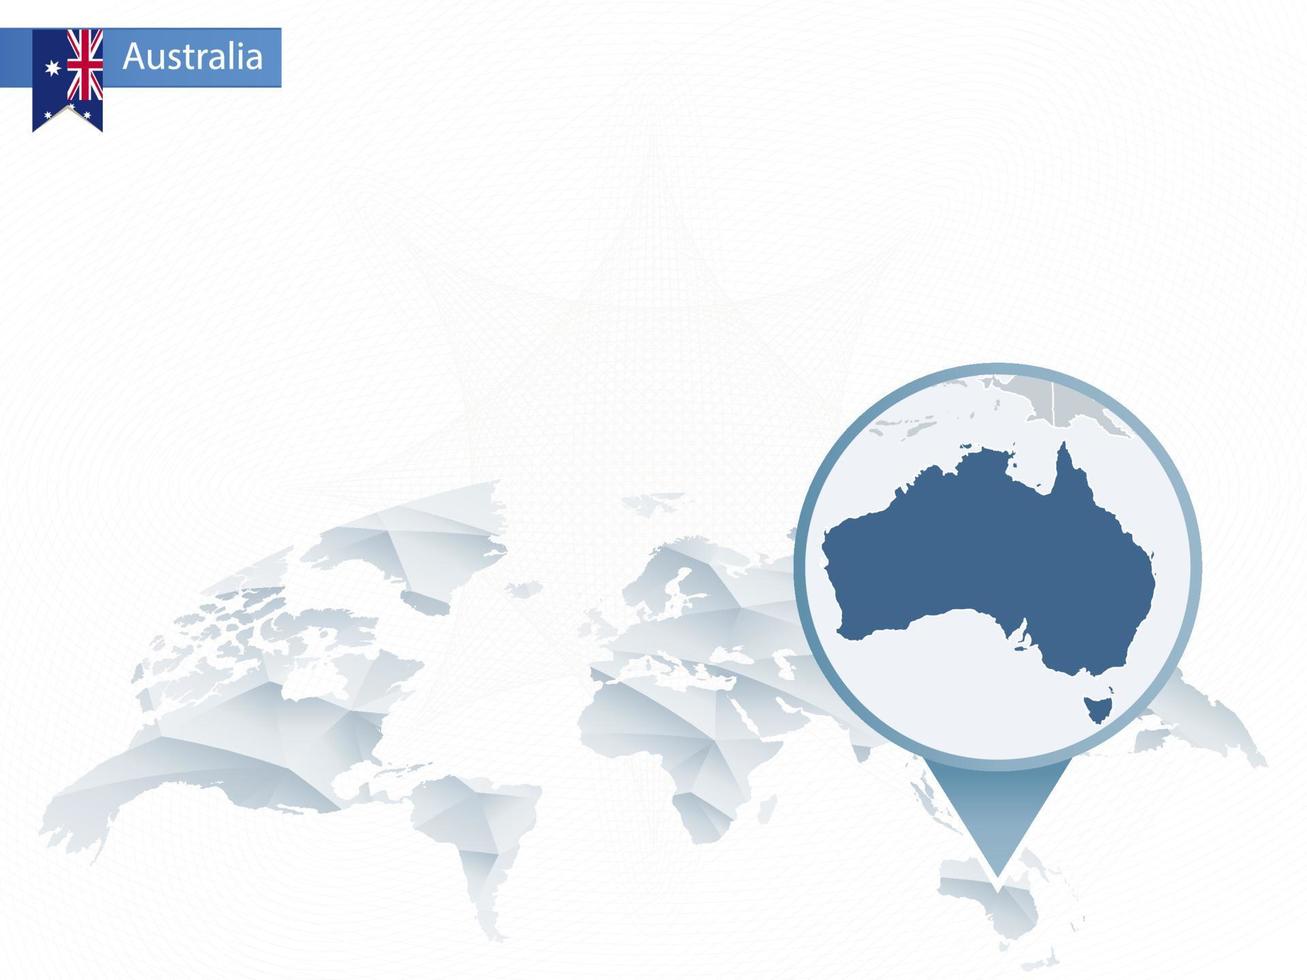 mapa-múndi abstrato arredondado com mapa detalhado fixado da austrália. vetor